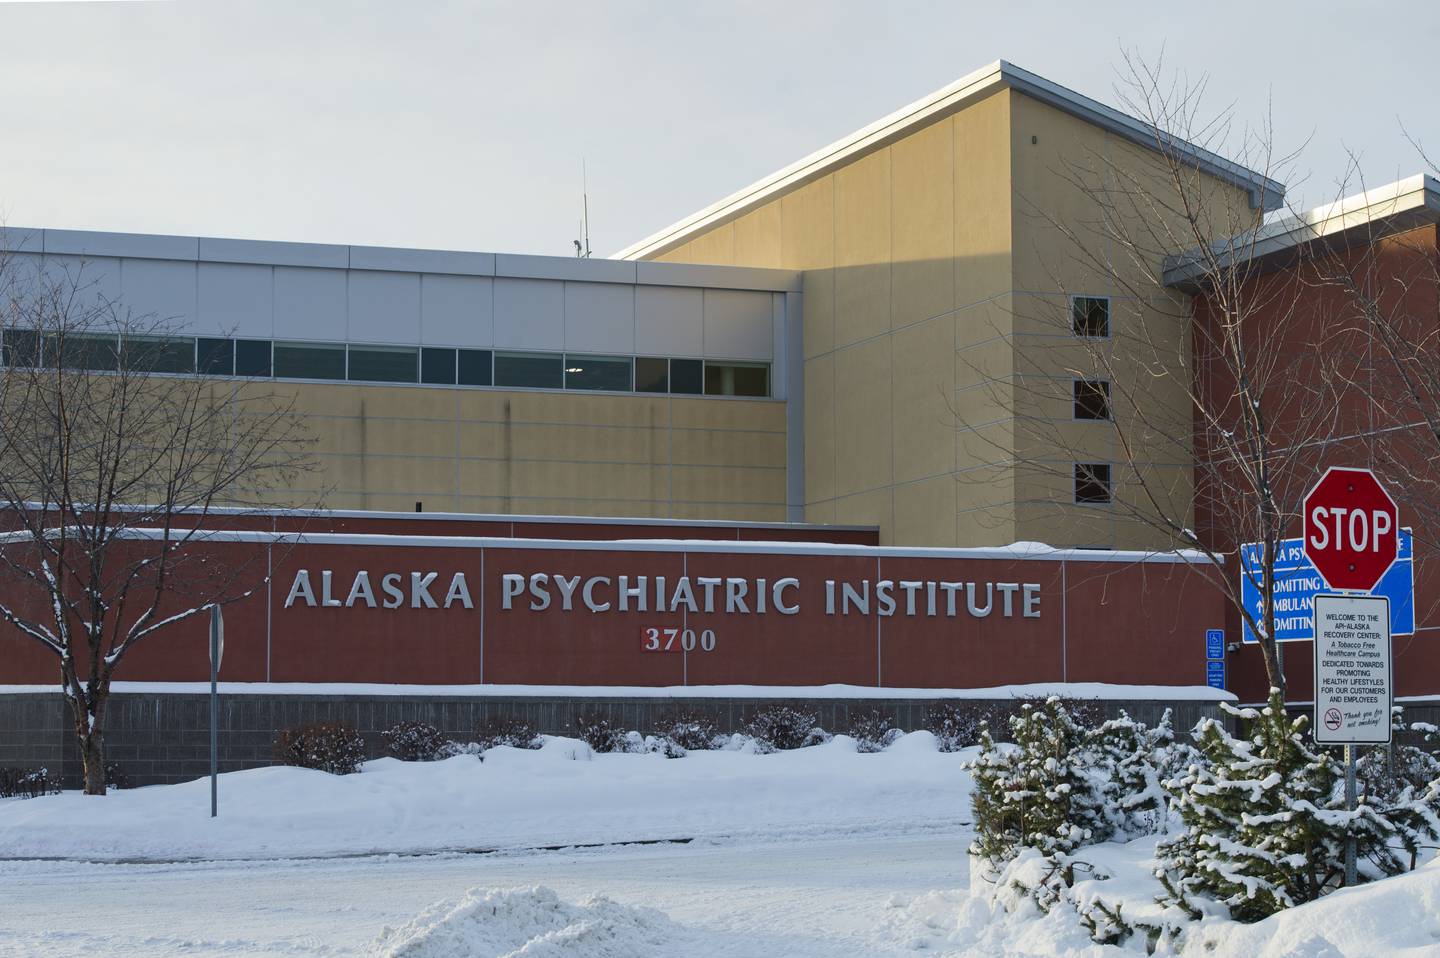 Alaska Psychiatric Institute, API